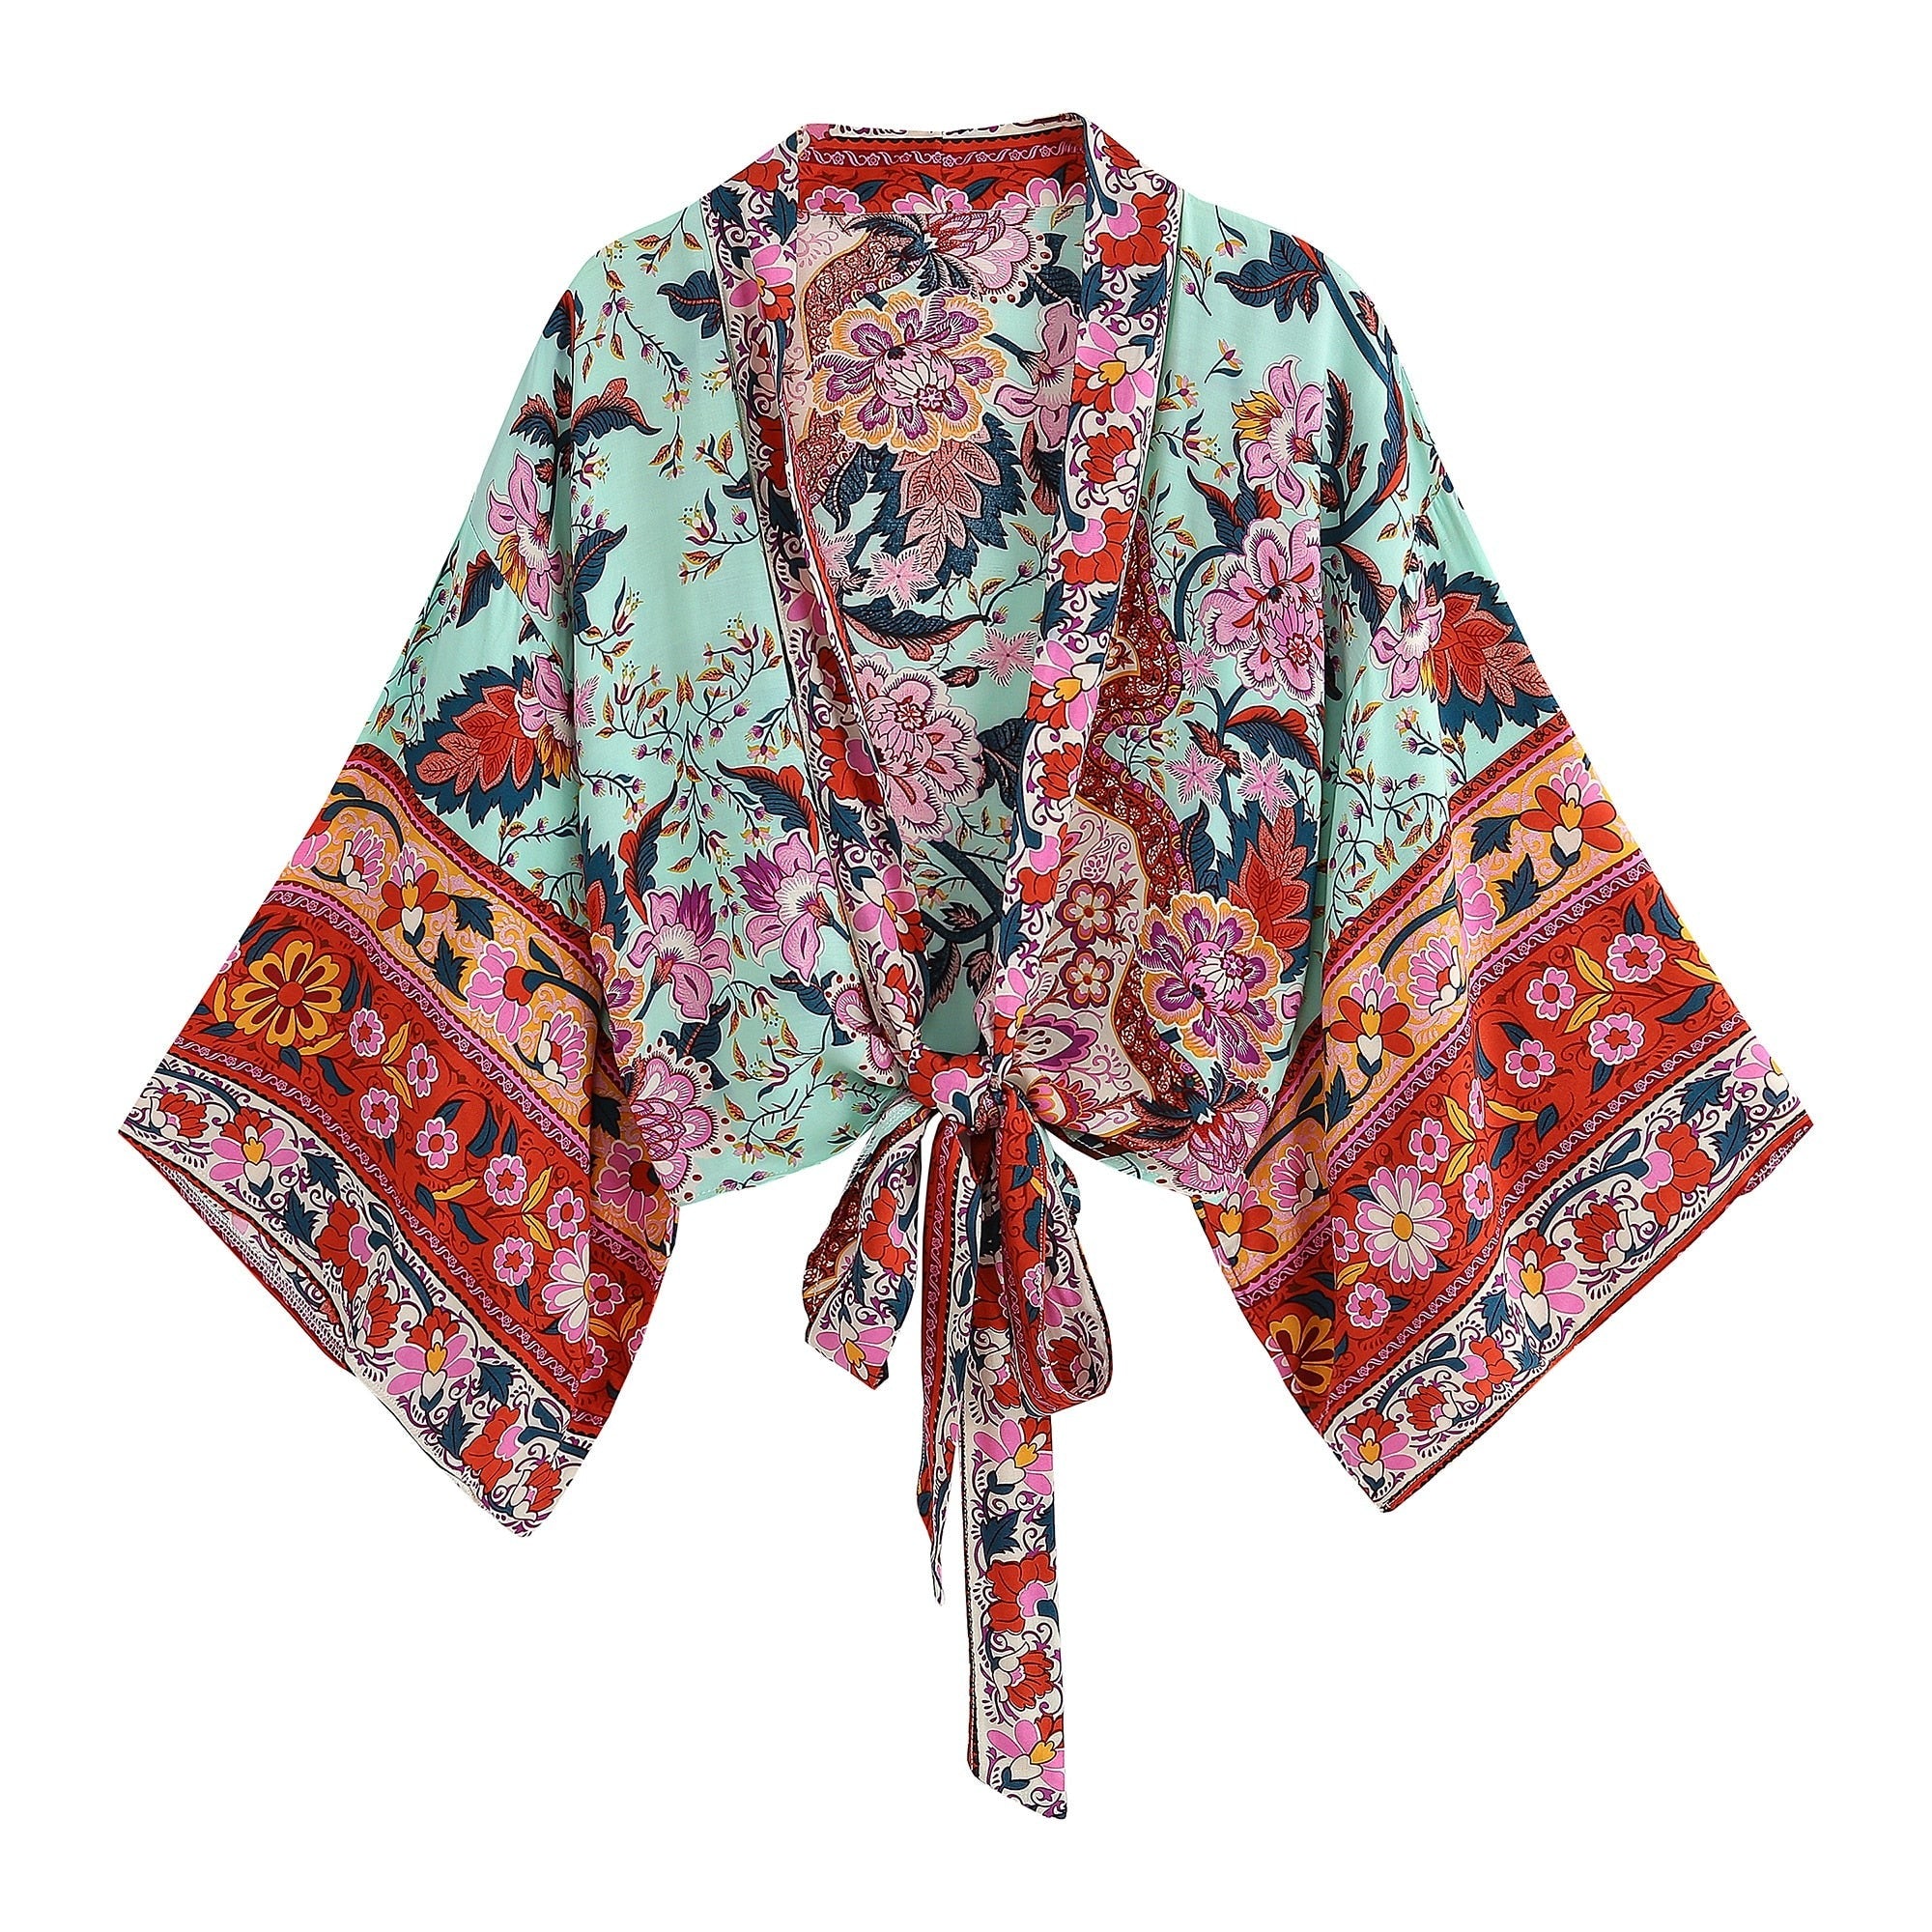 Short Kimono Wrap Tops Boho Floral